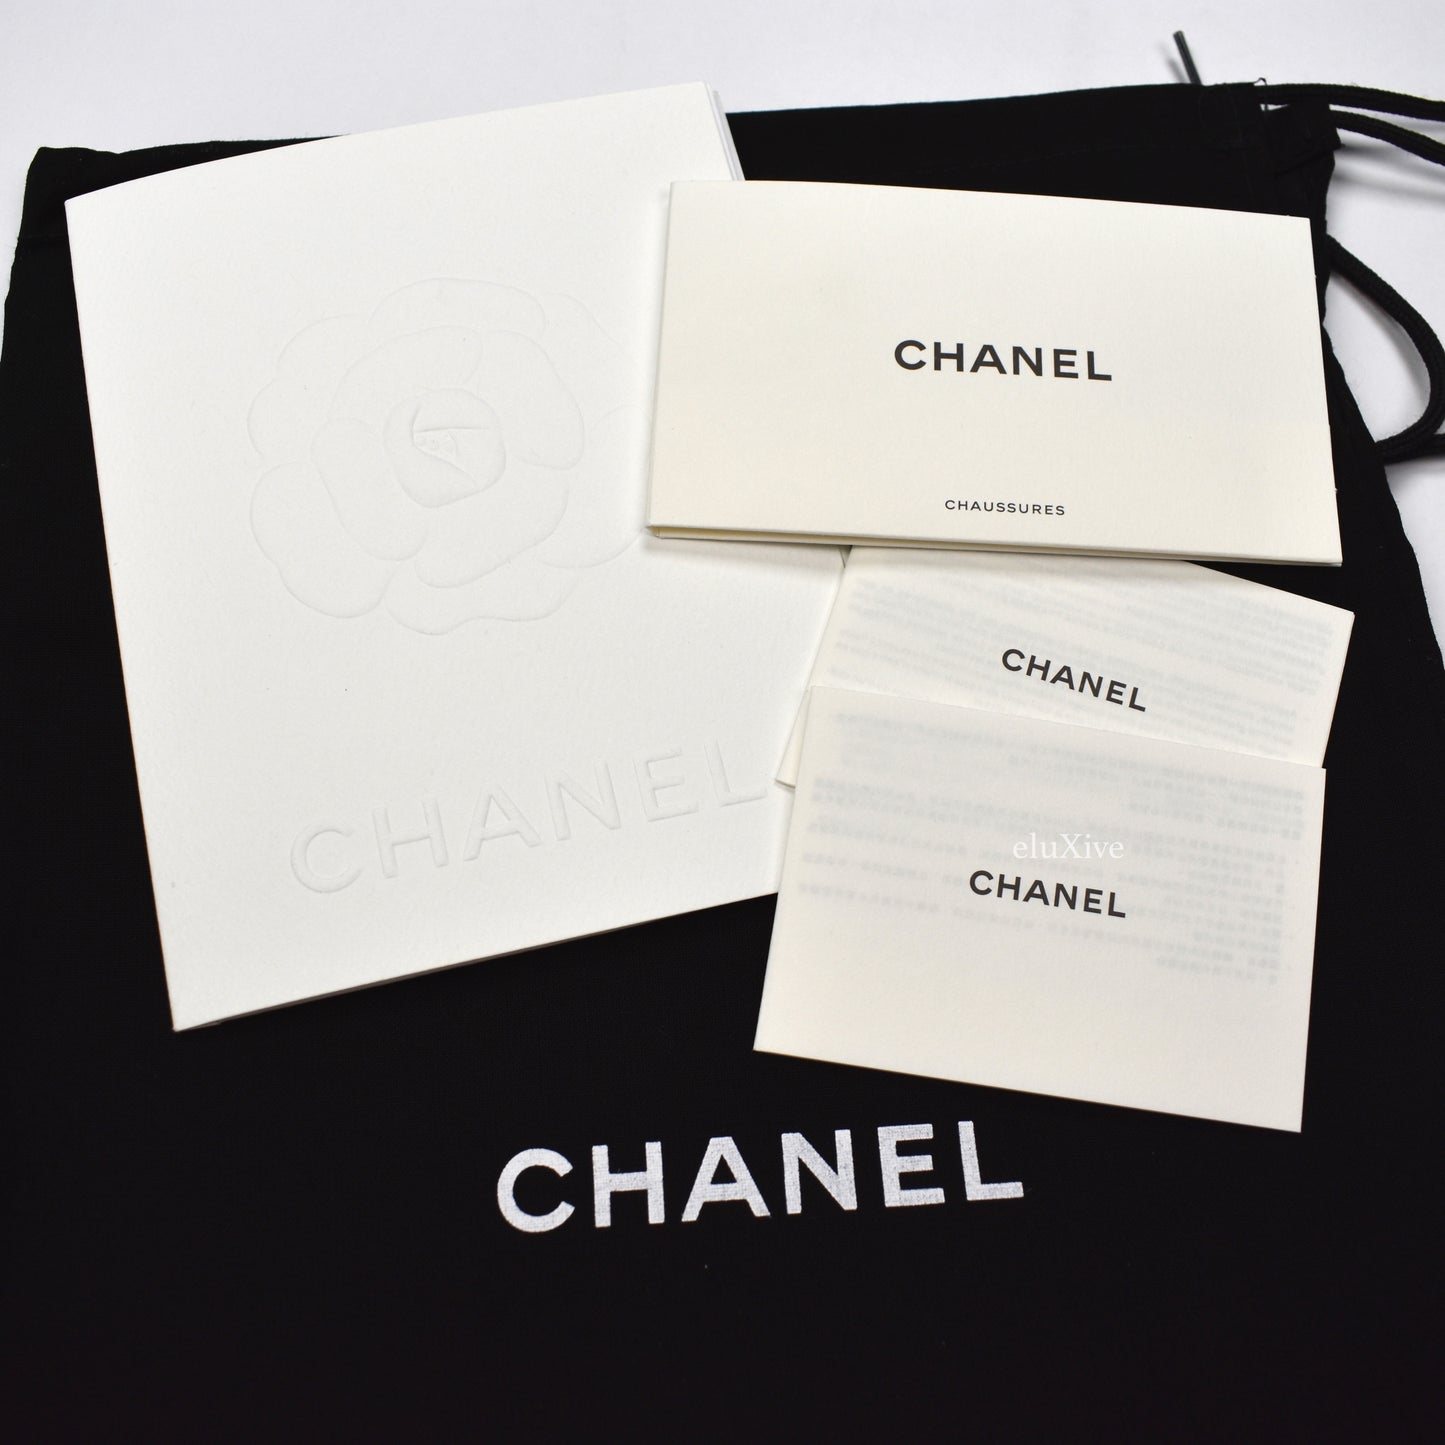 Chanel - Classic Monogram Logo Trainer (White/Blue)